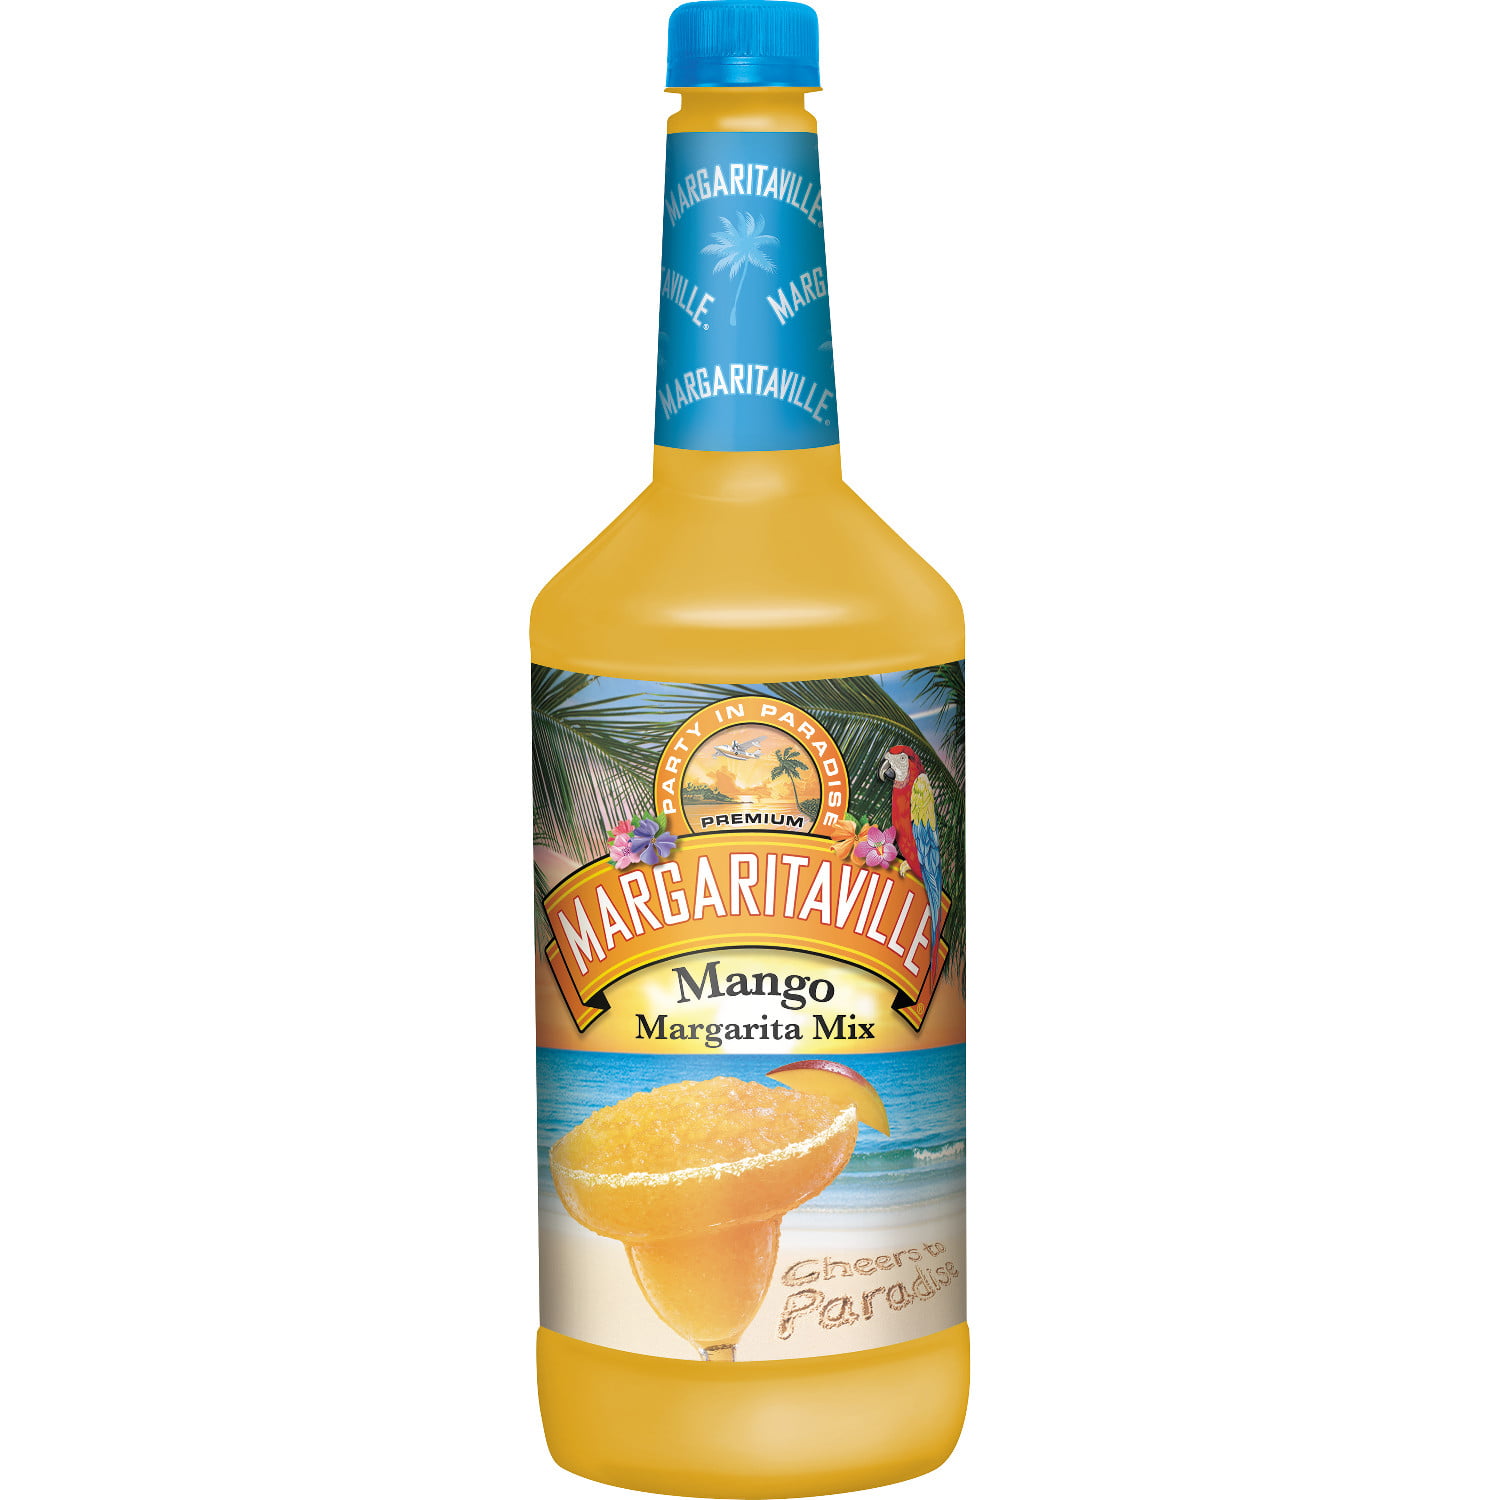 Margaritaville Mango Margarita Mix, 1 L Bottle, 6 Count - Walmart.com.